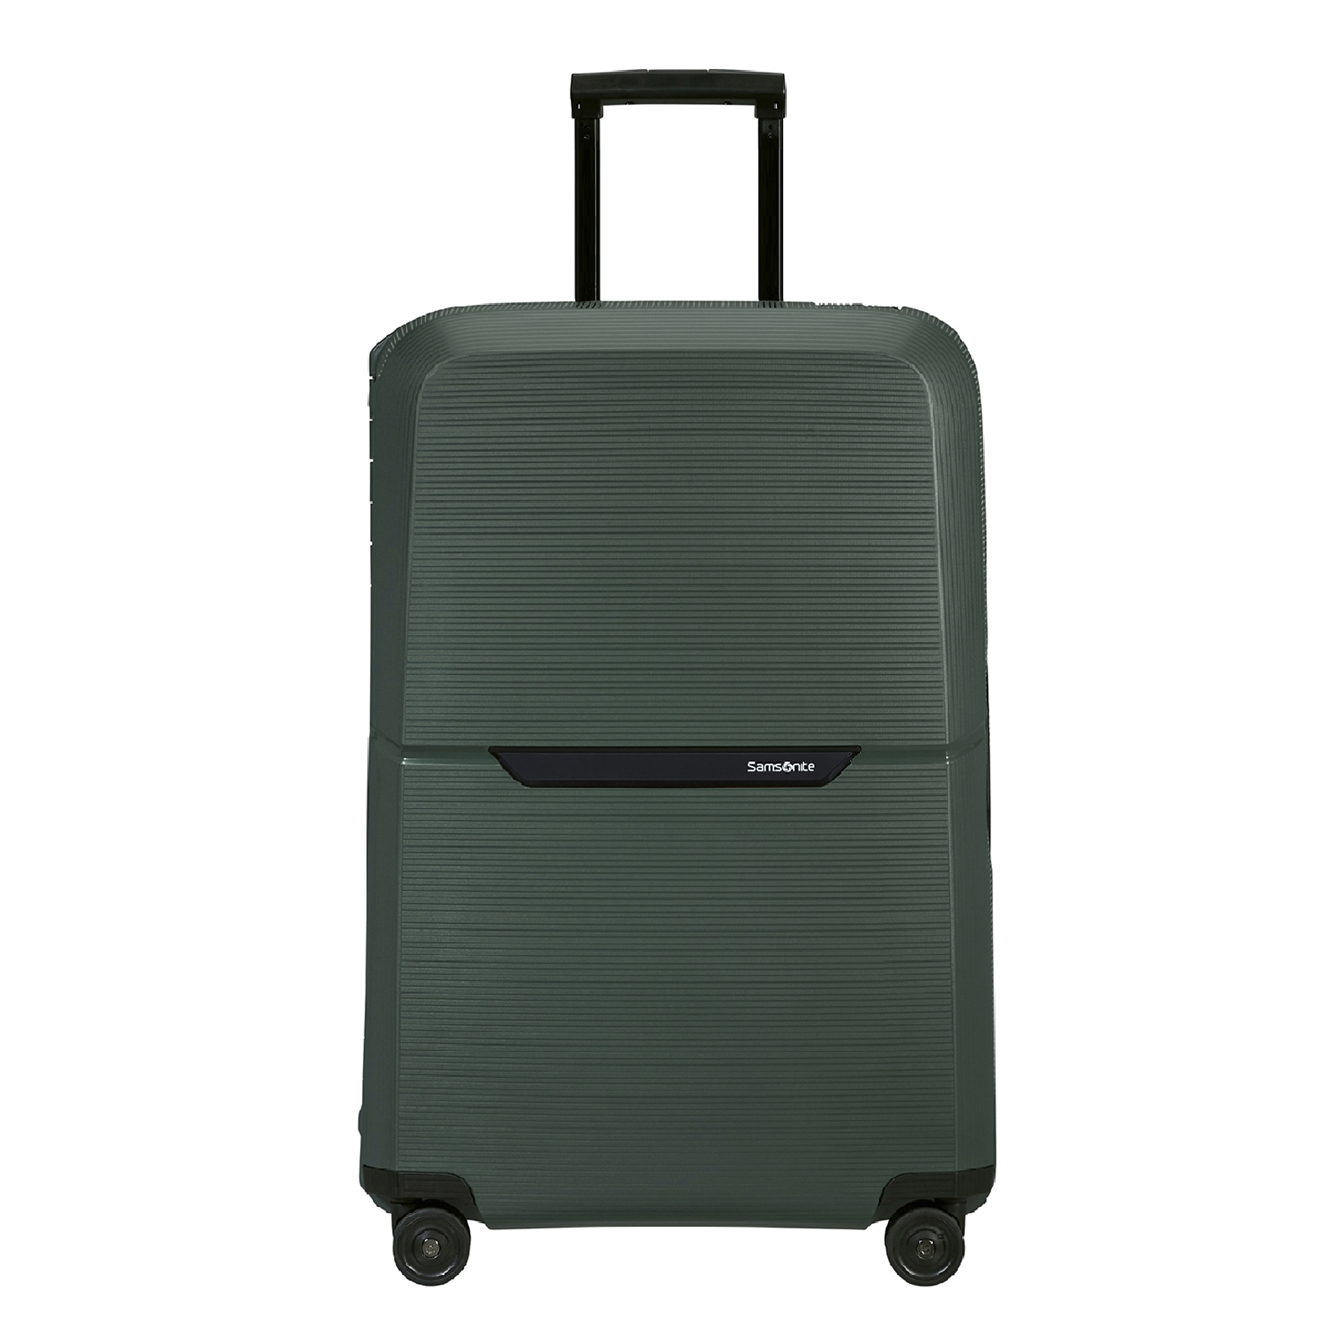 regel trompet analogie Welk formaat koffer moet ik kiezen? Het juiste formaat koffer | Travelbags  | Travelbags.nl